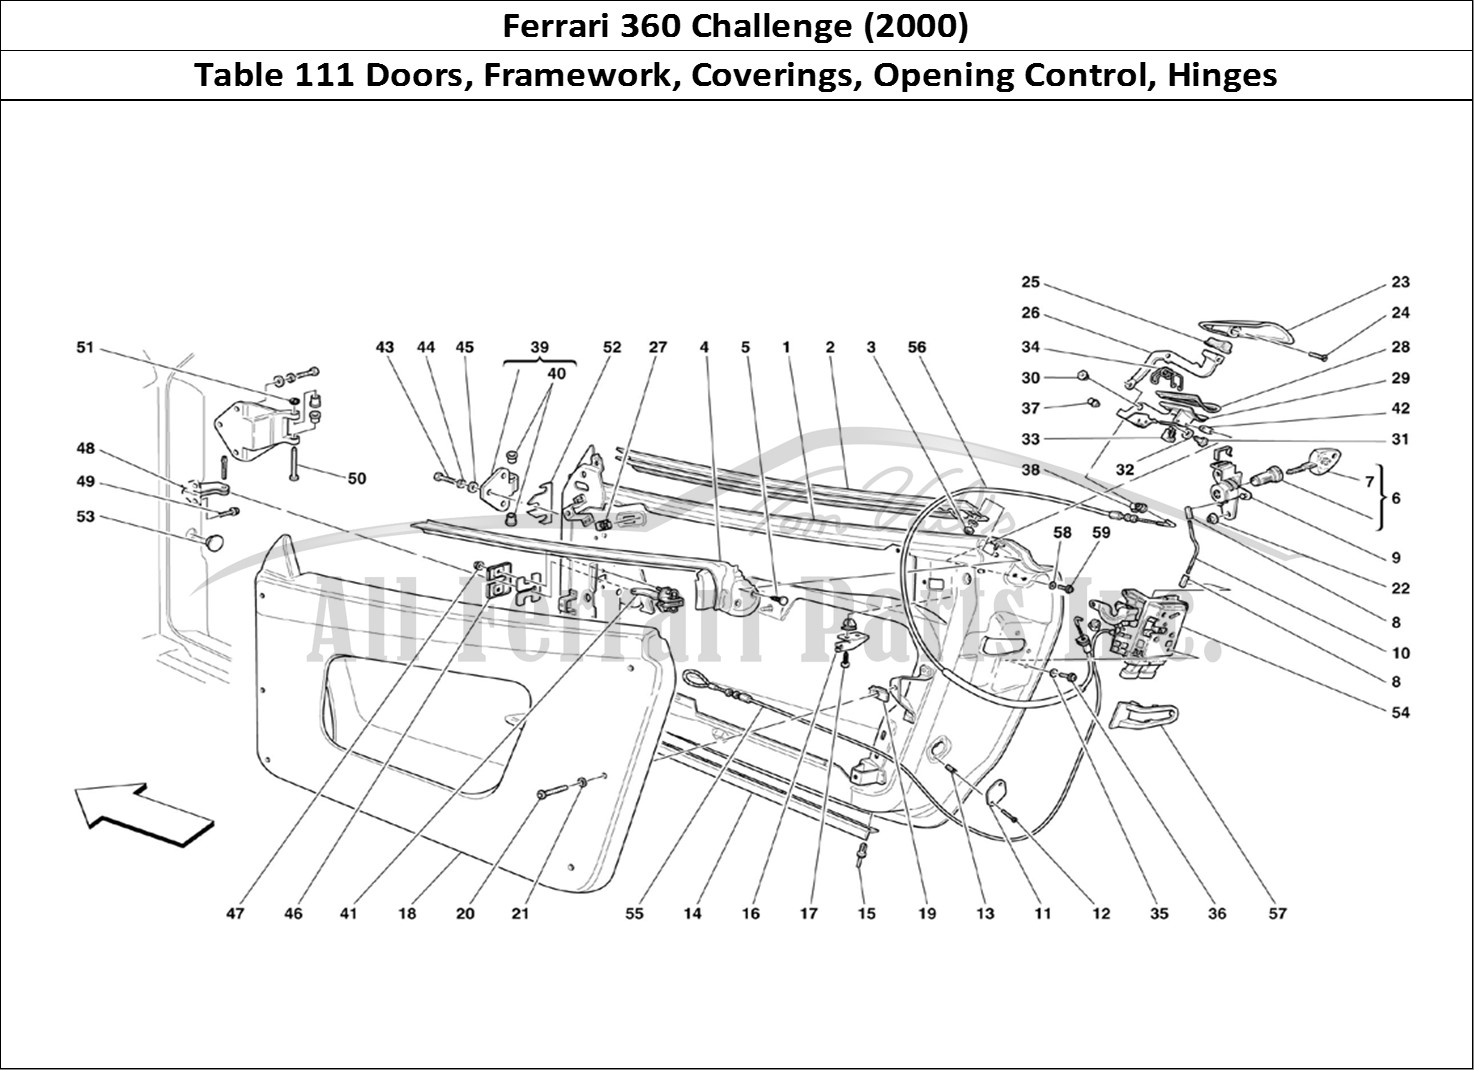 Ferrari Parts Ferrari 360 Challenge (2000) Page 111 Doors - Framework and Cov